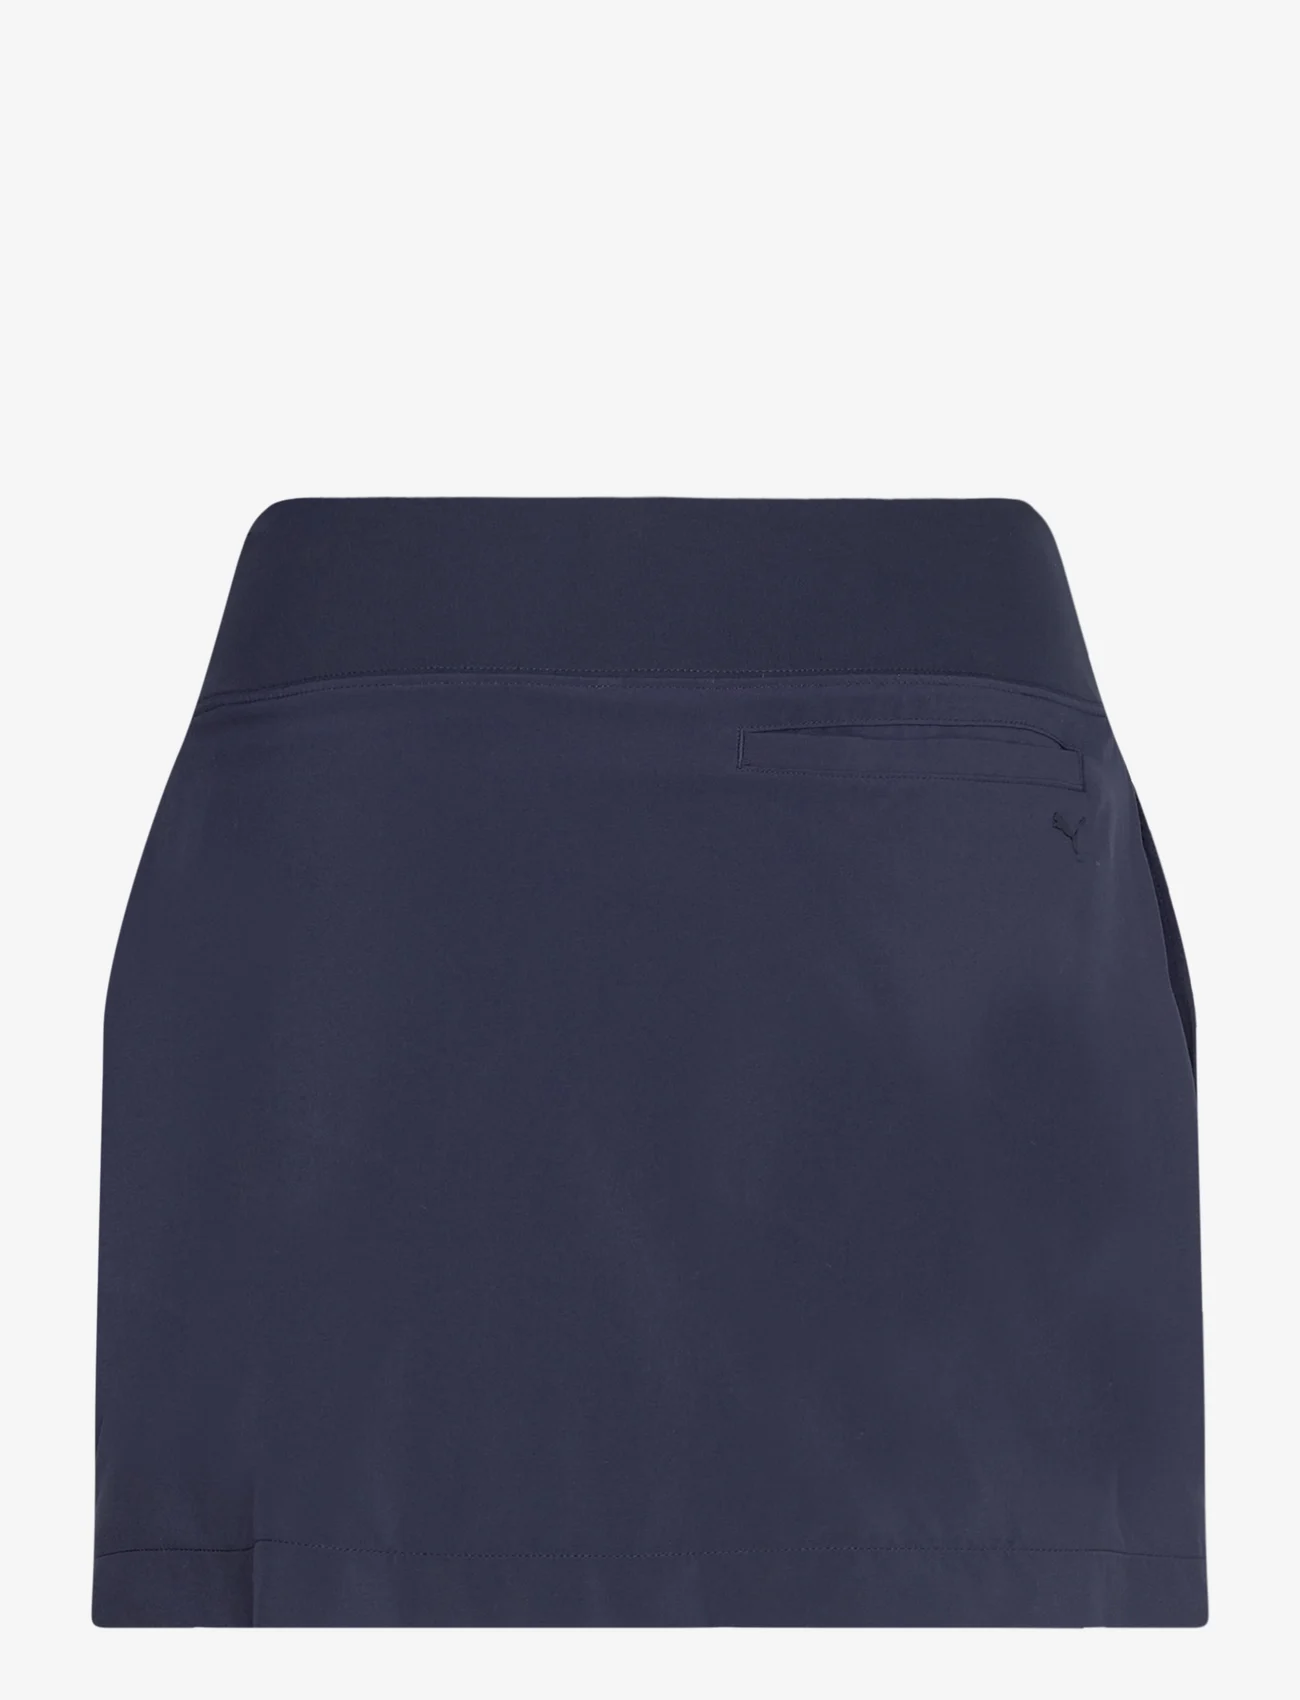 PUMA Golf - W Blake Skirt - skirts - deep navy - 1